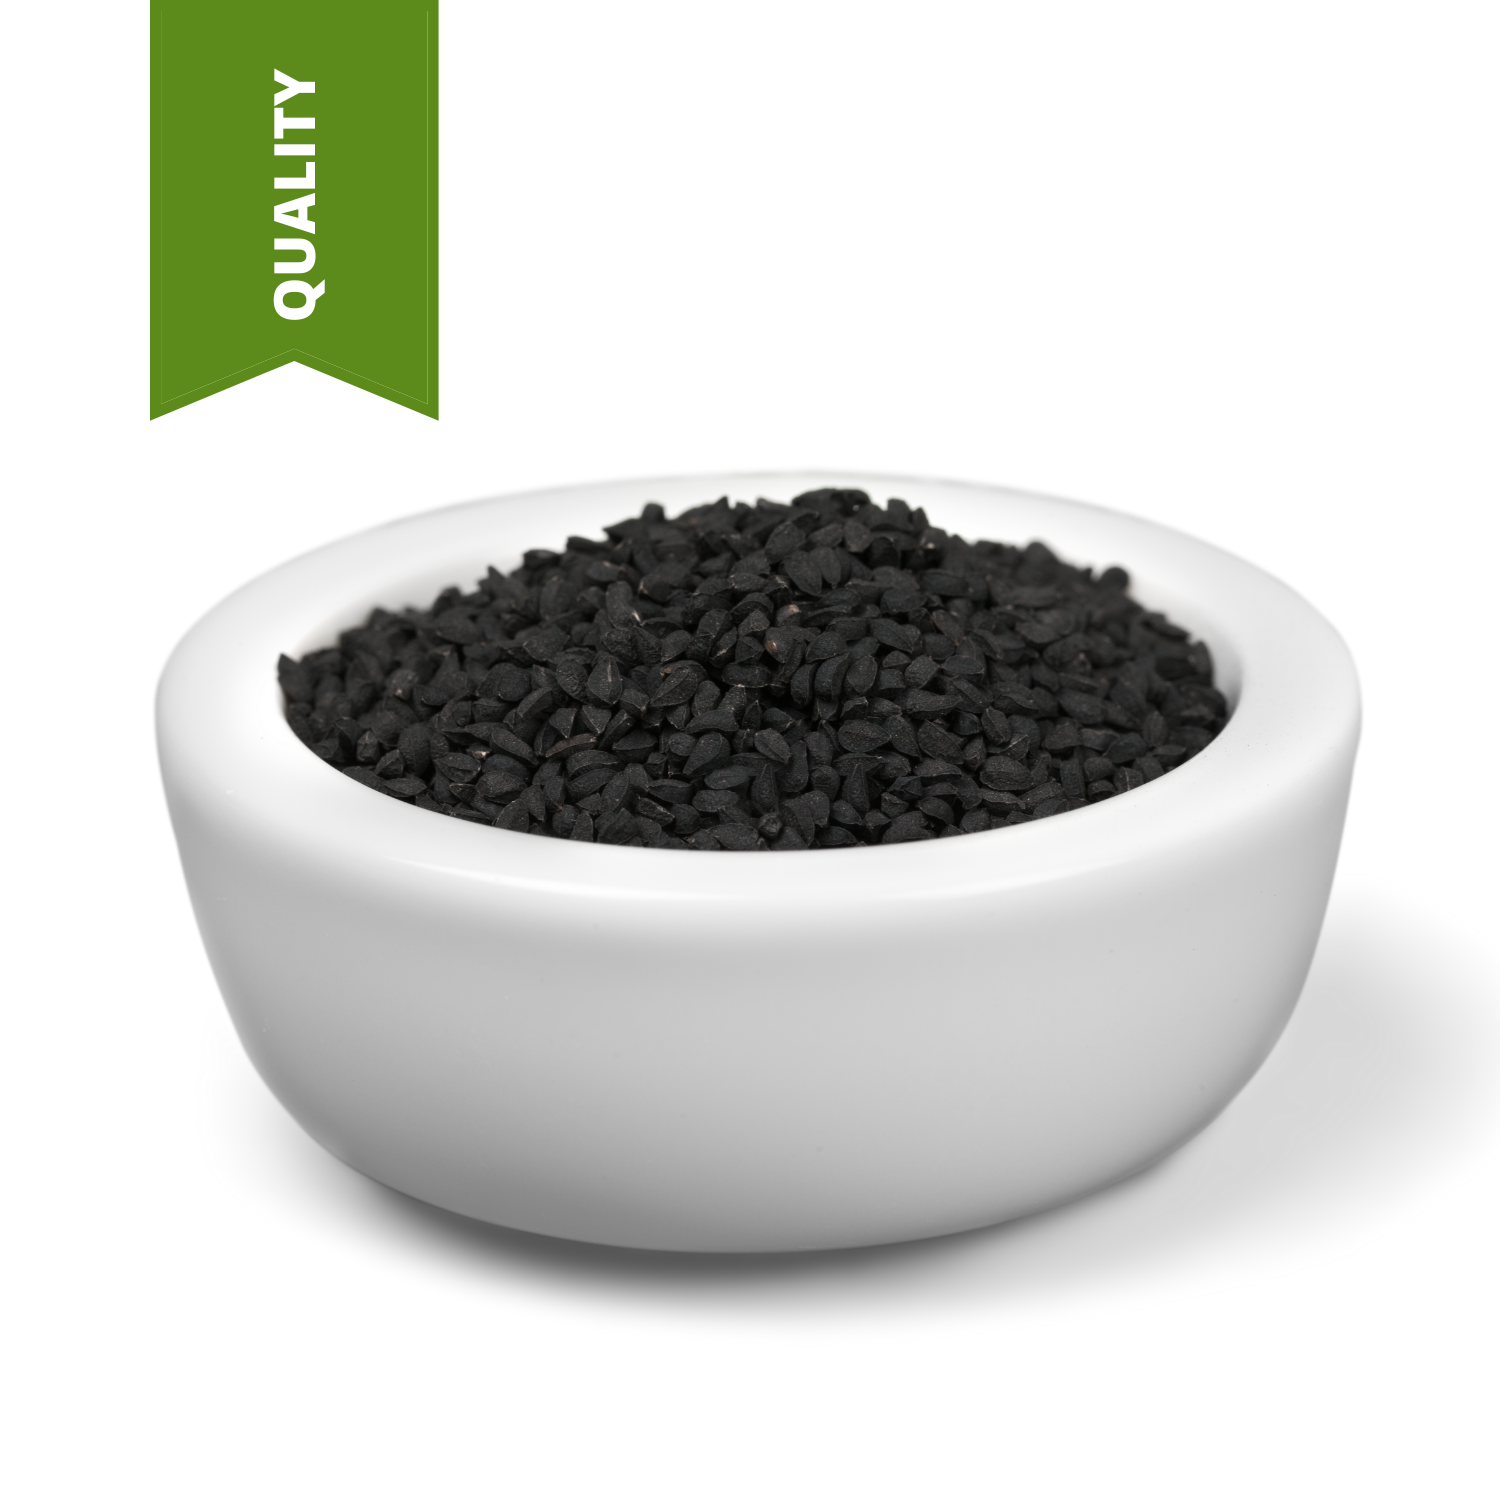 Nectar Valley Black Seed oil (Kalonji Oil / Nigella Sativa Oil / Black  Cumin Oil / Kalajira Oil) Organically Processed